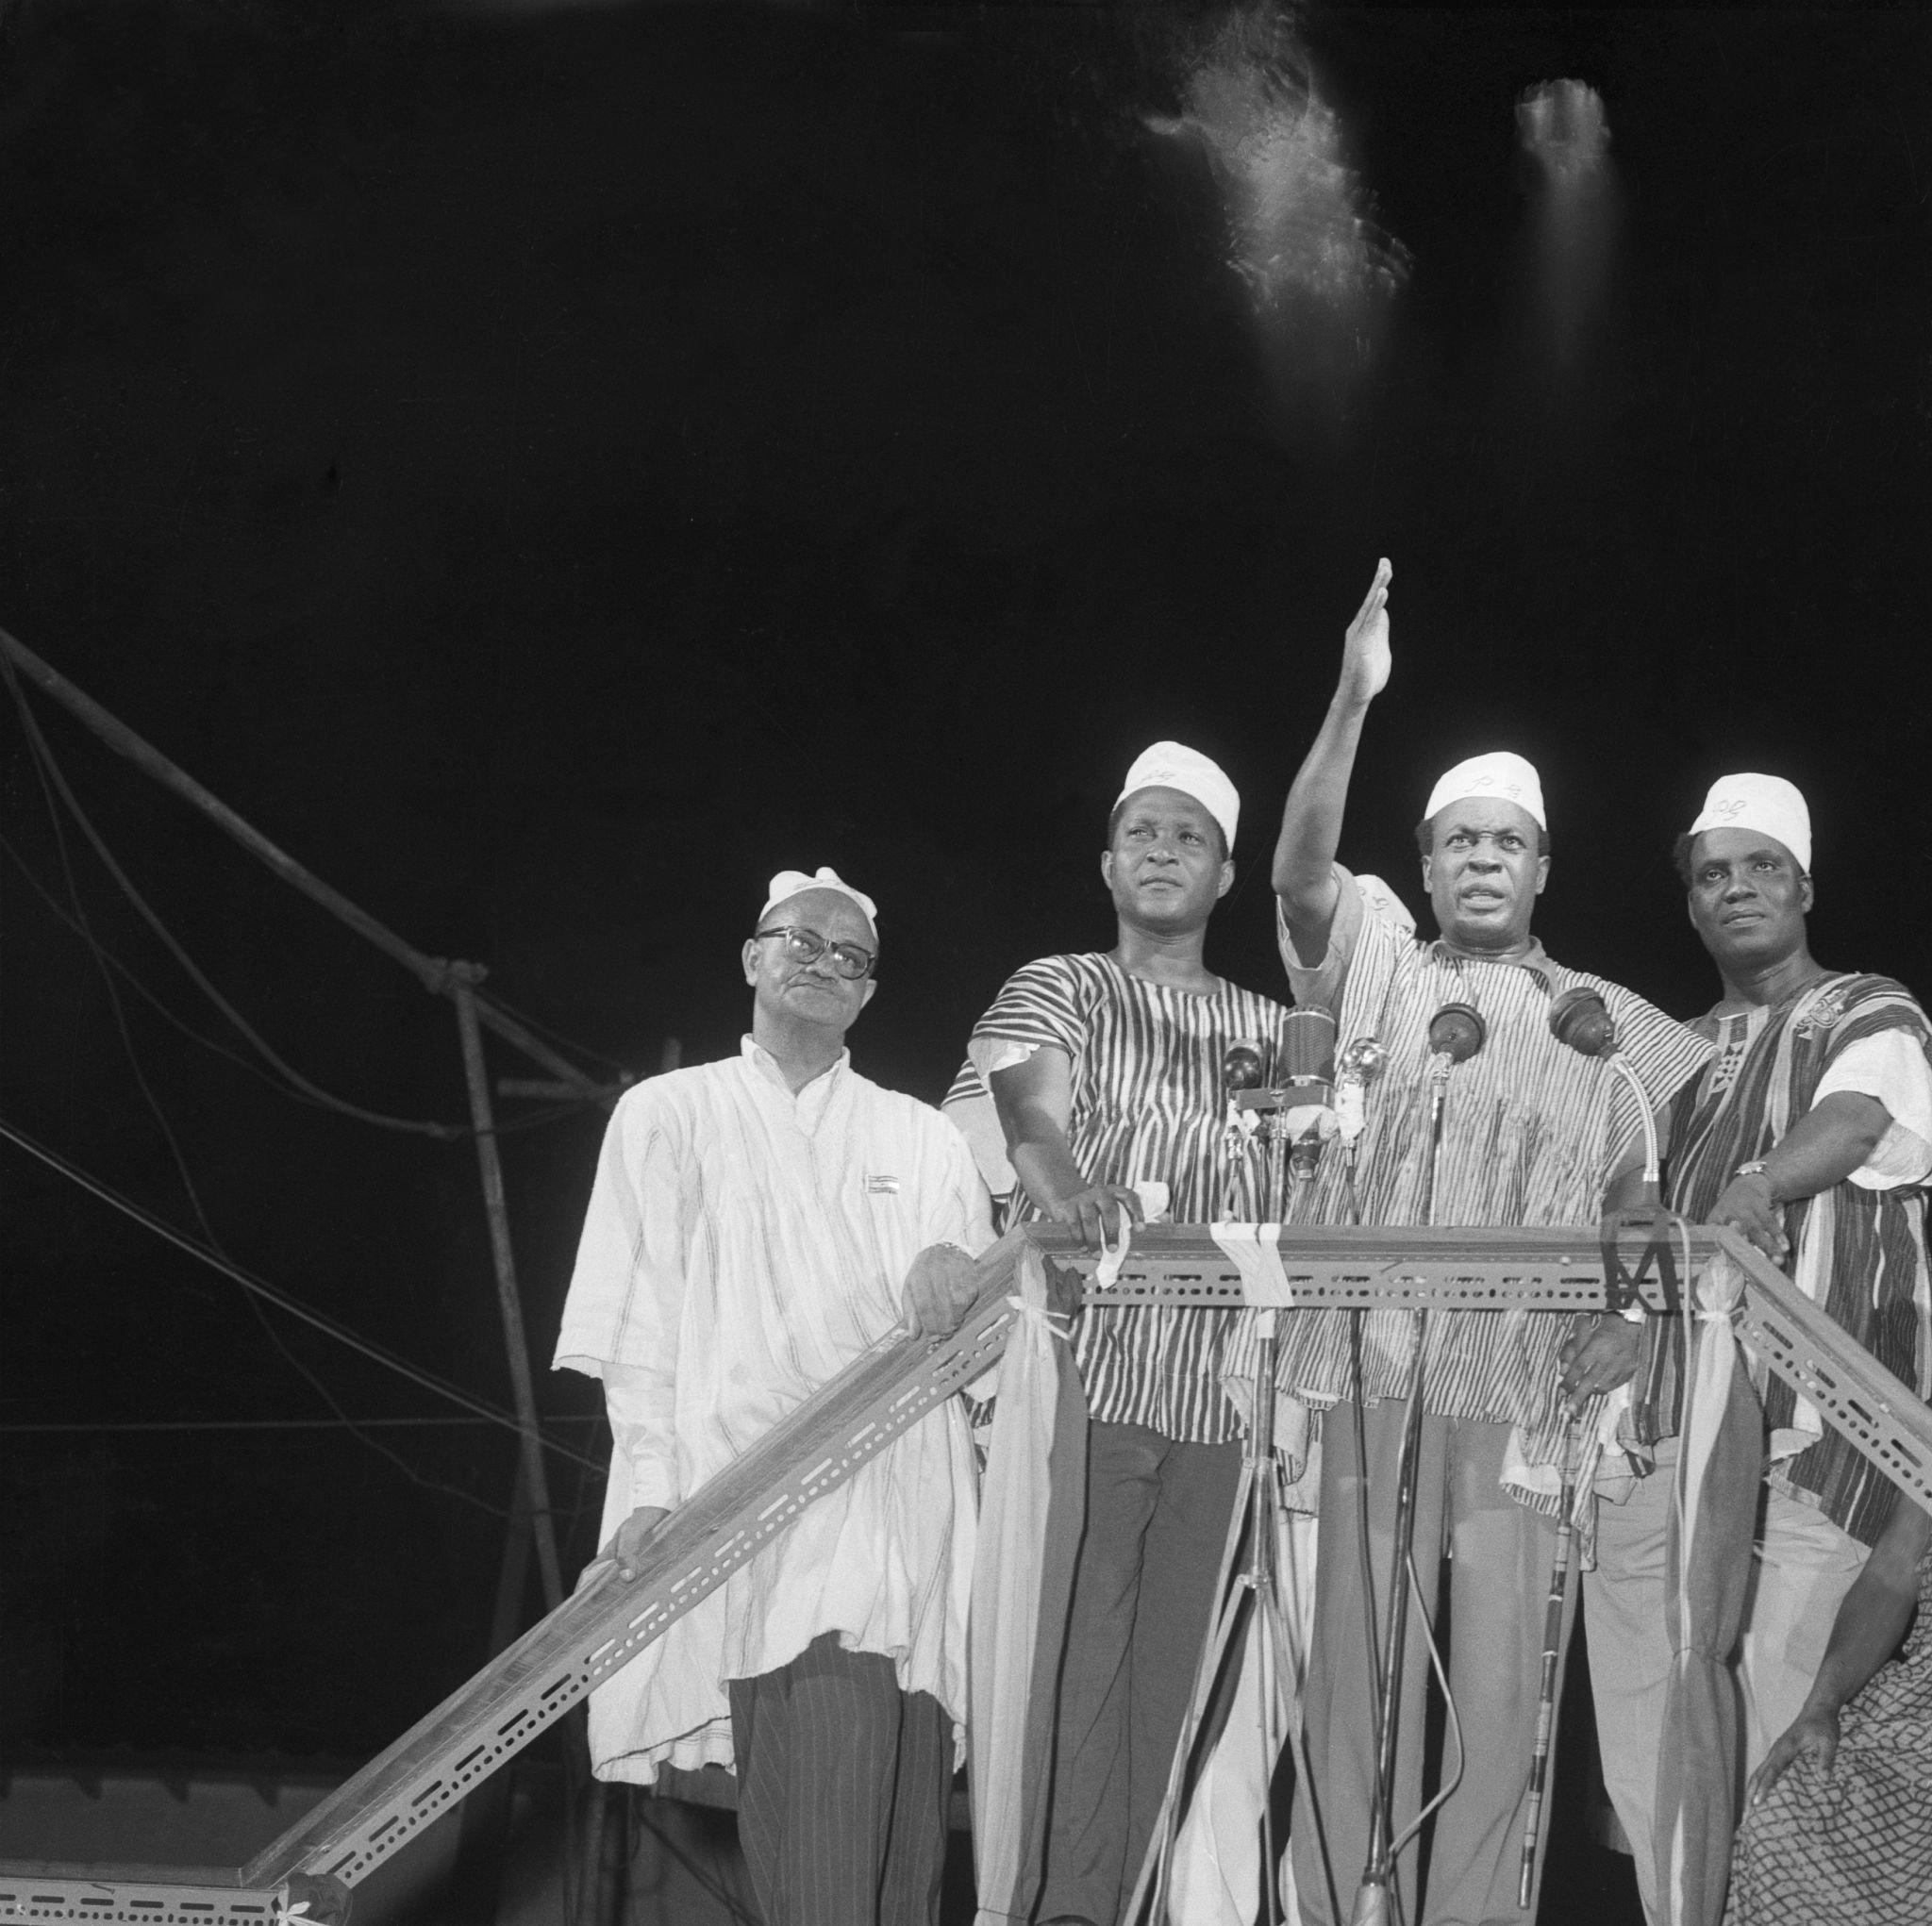 Prime Minister Nkrumah at Statehood Ceremony